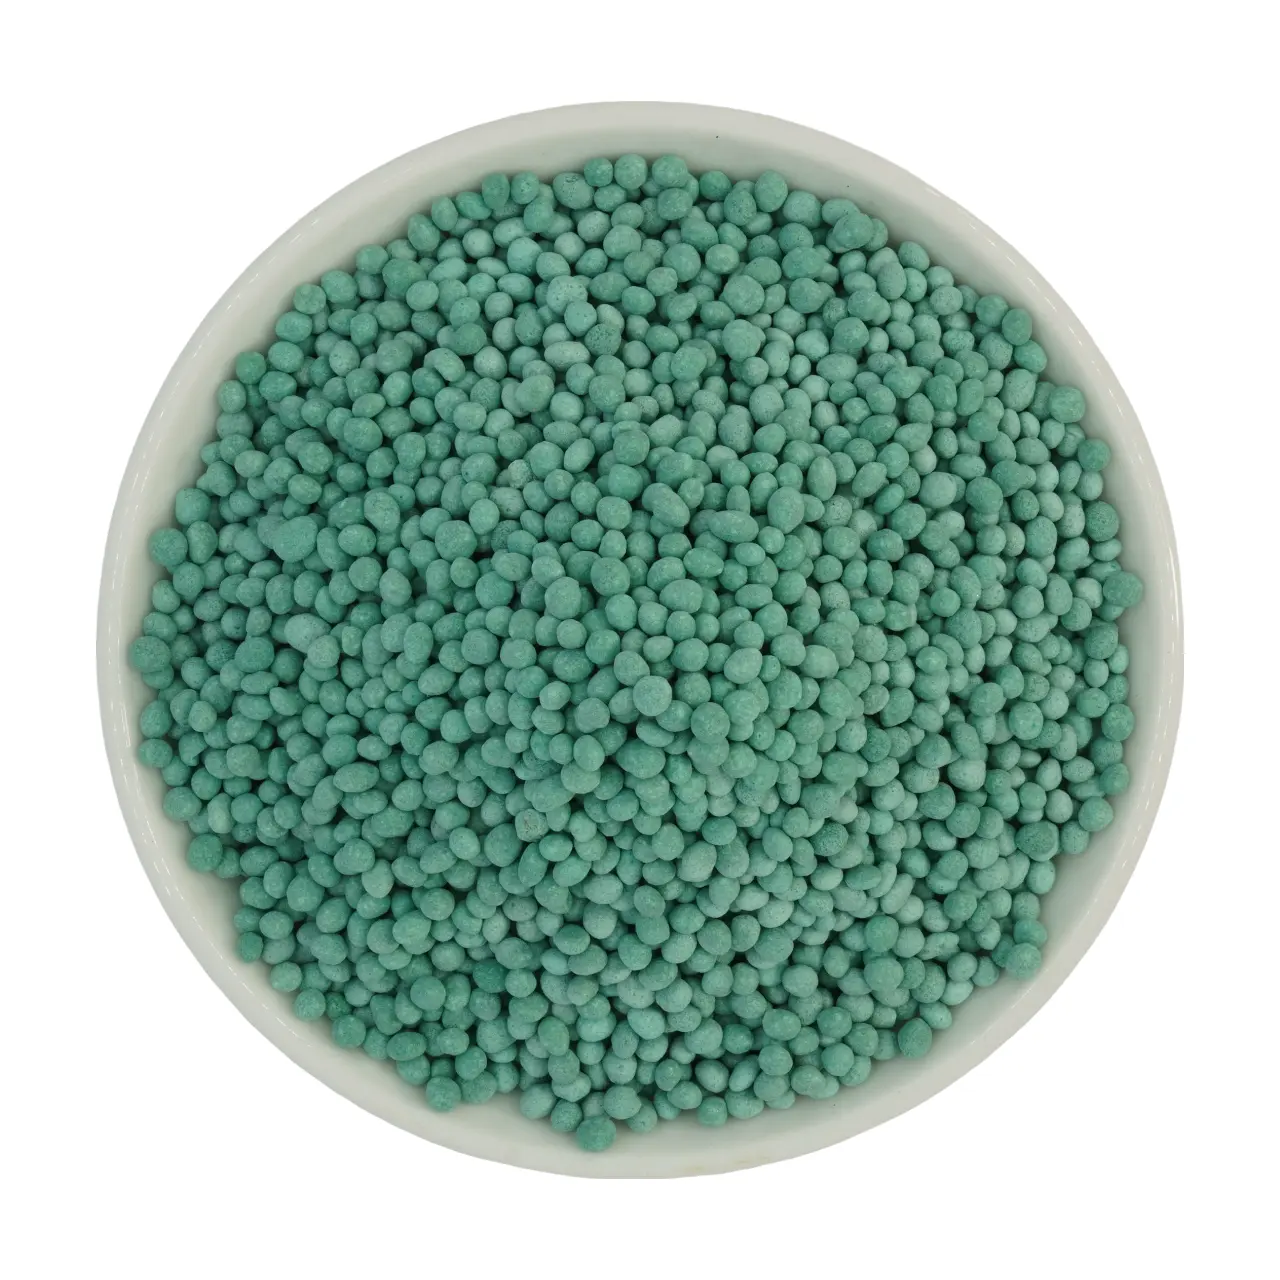 Schlussverkauf NPK 15-5-20+20 MgO hochwertiger granularer Zusammensetzungskörpern Naturfarbe Granulatdünger